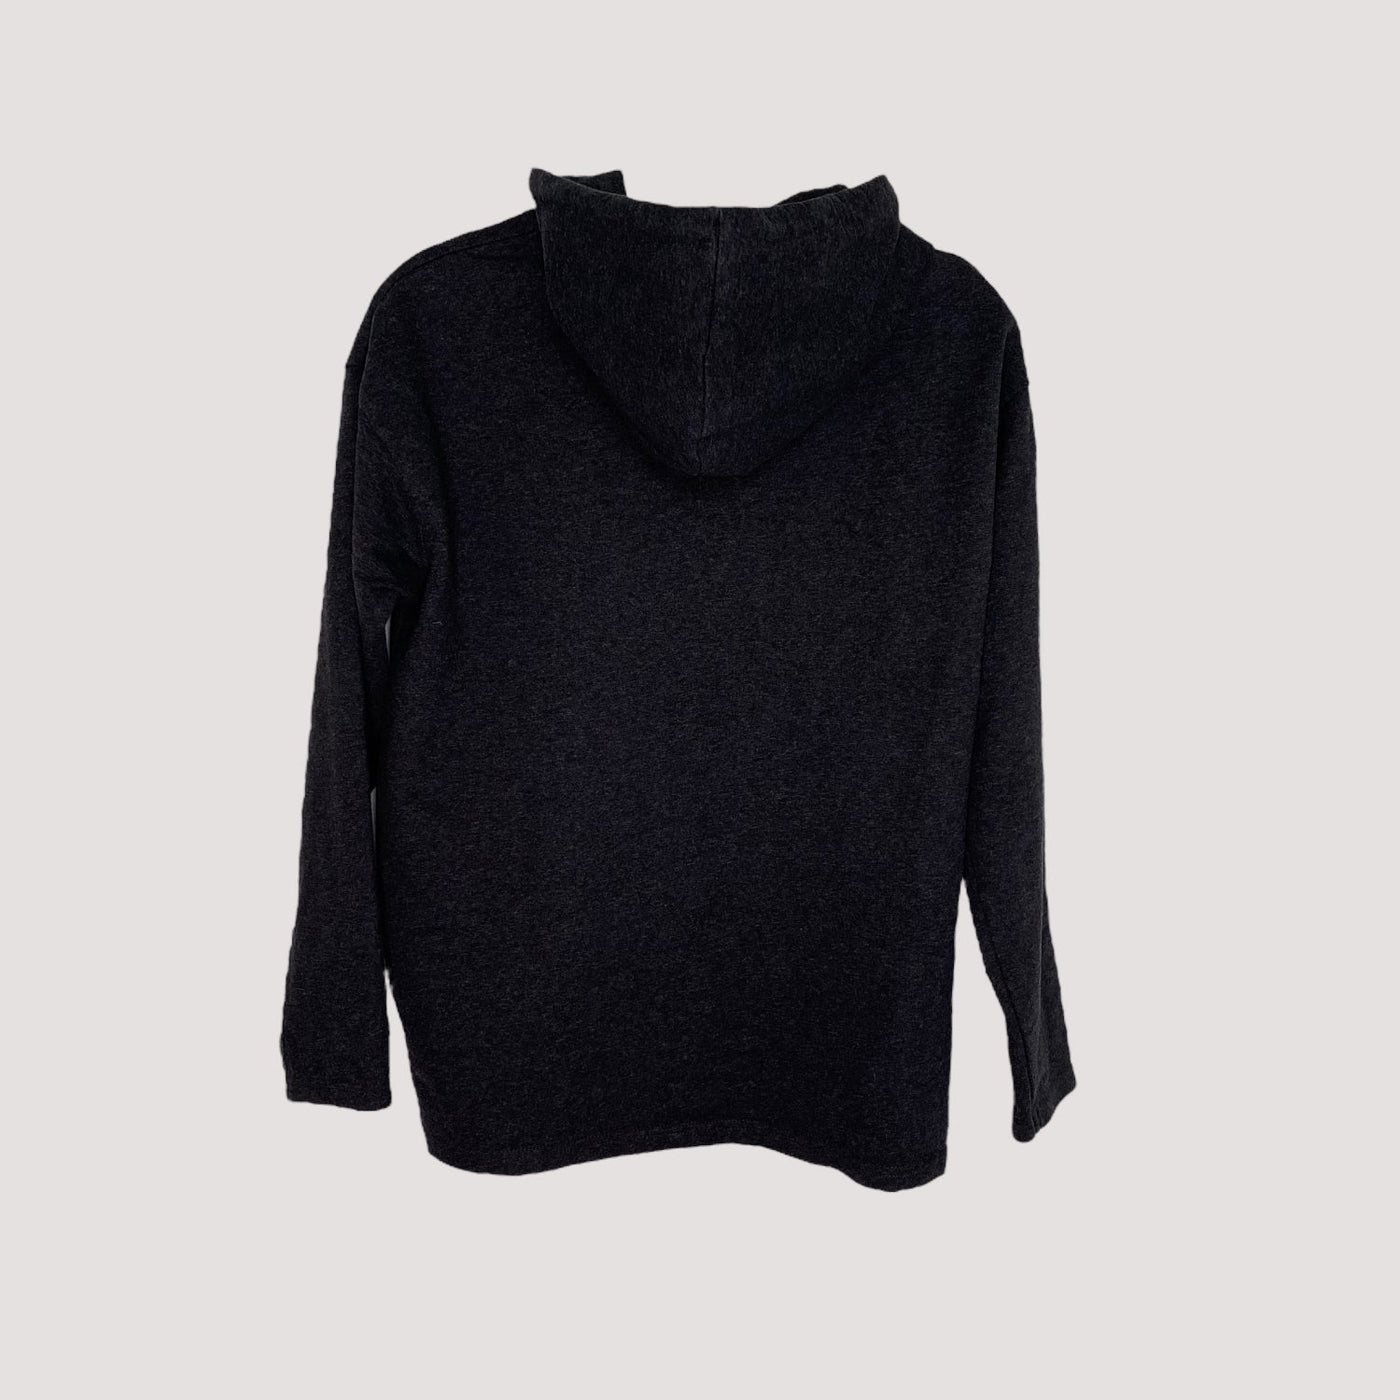 Globe Hope hooded sweatshirt, dark grey | unisex M